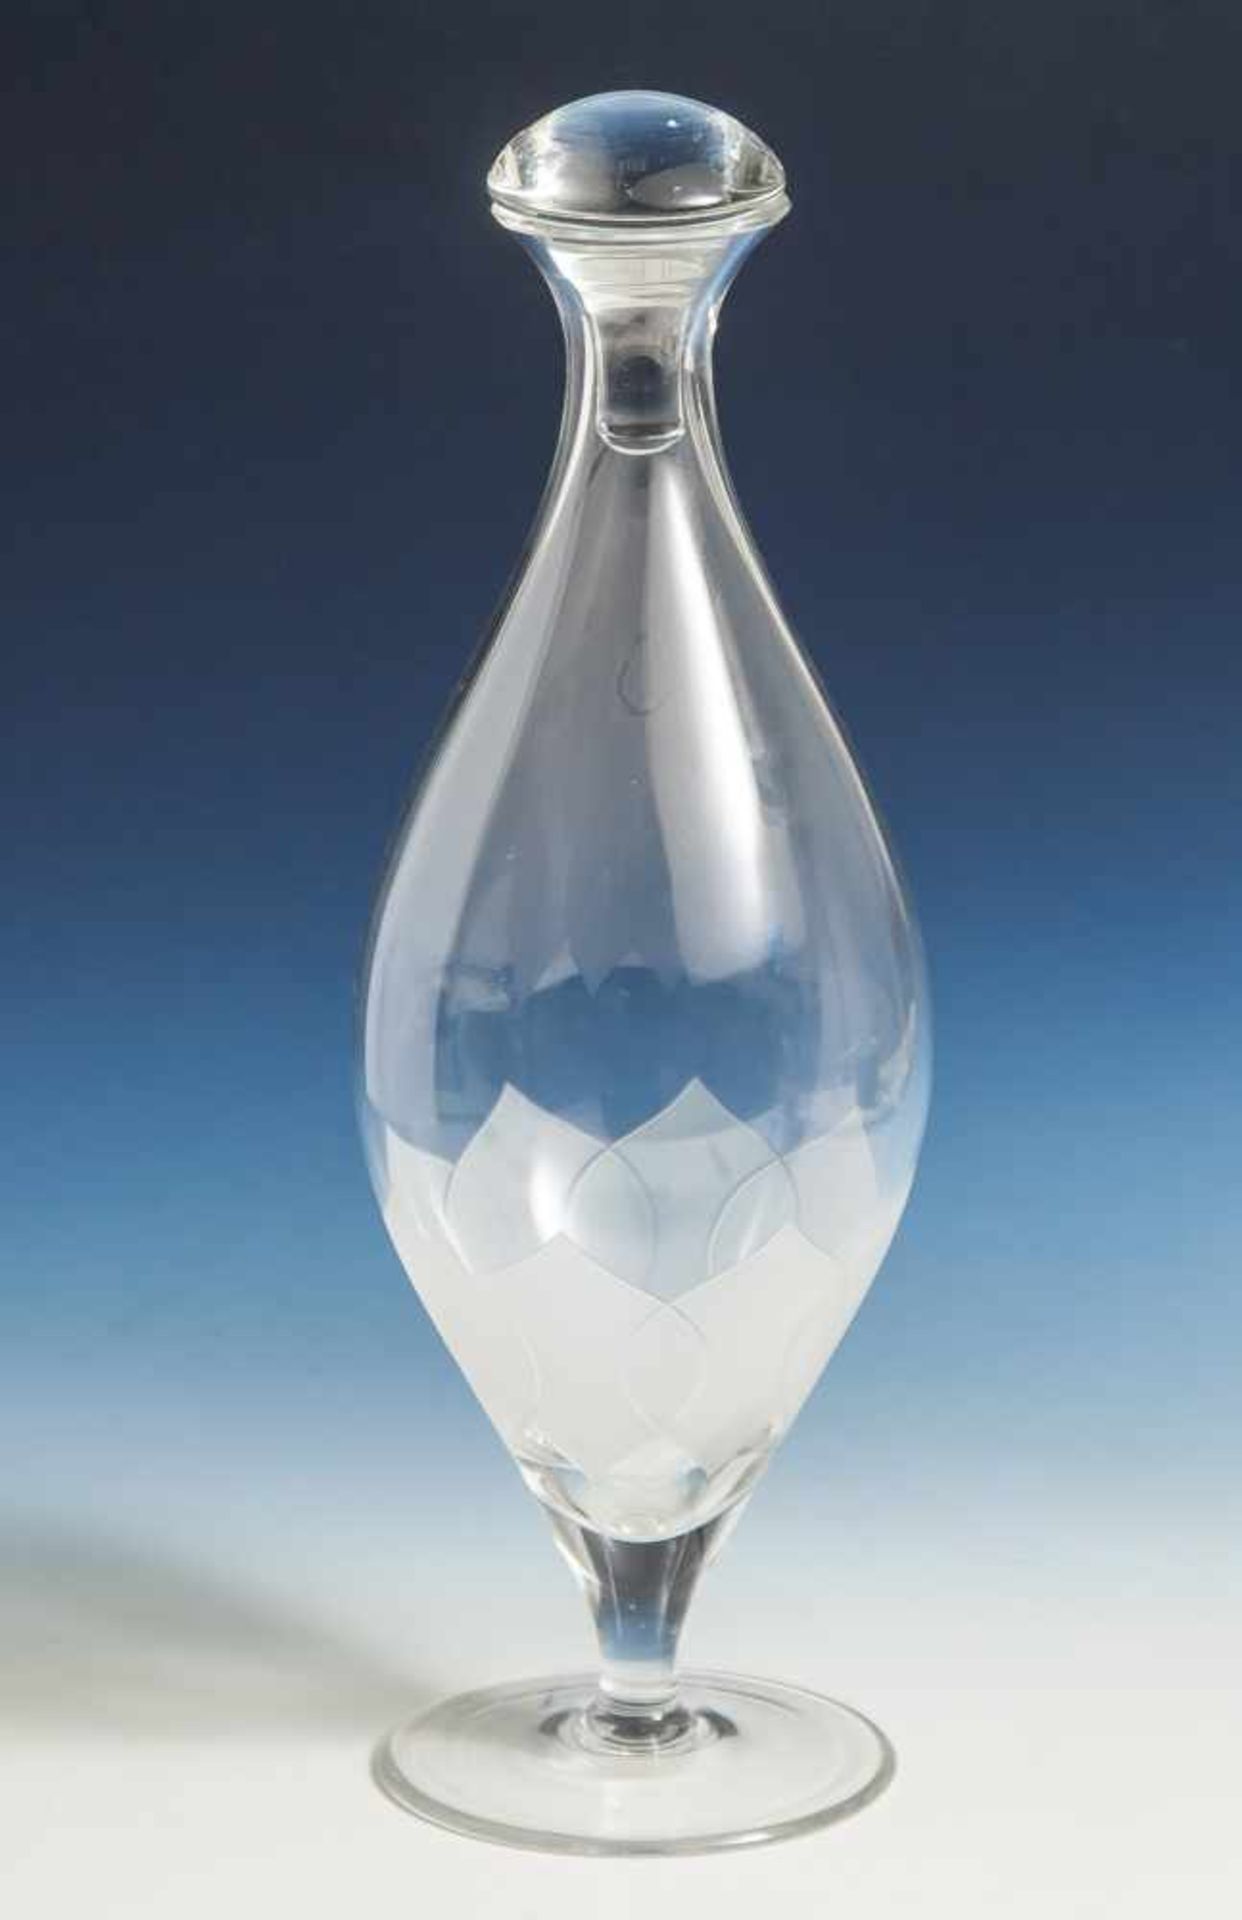 Glasservice Rosenthal, 34-teilig, Dekor "Lotus", bestehend aus: 1 Karaffe mit Stöpsel (H.ca. 32 cm), - Image 2 of 2